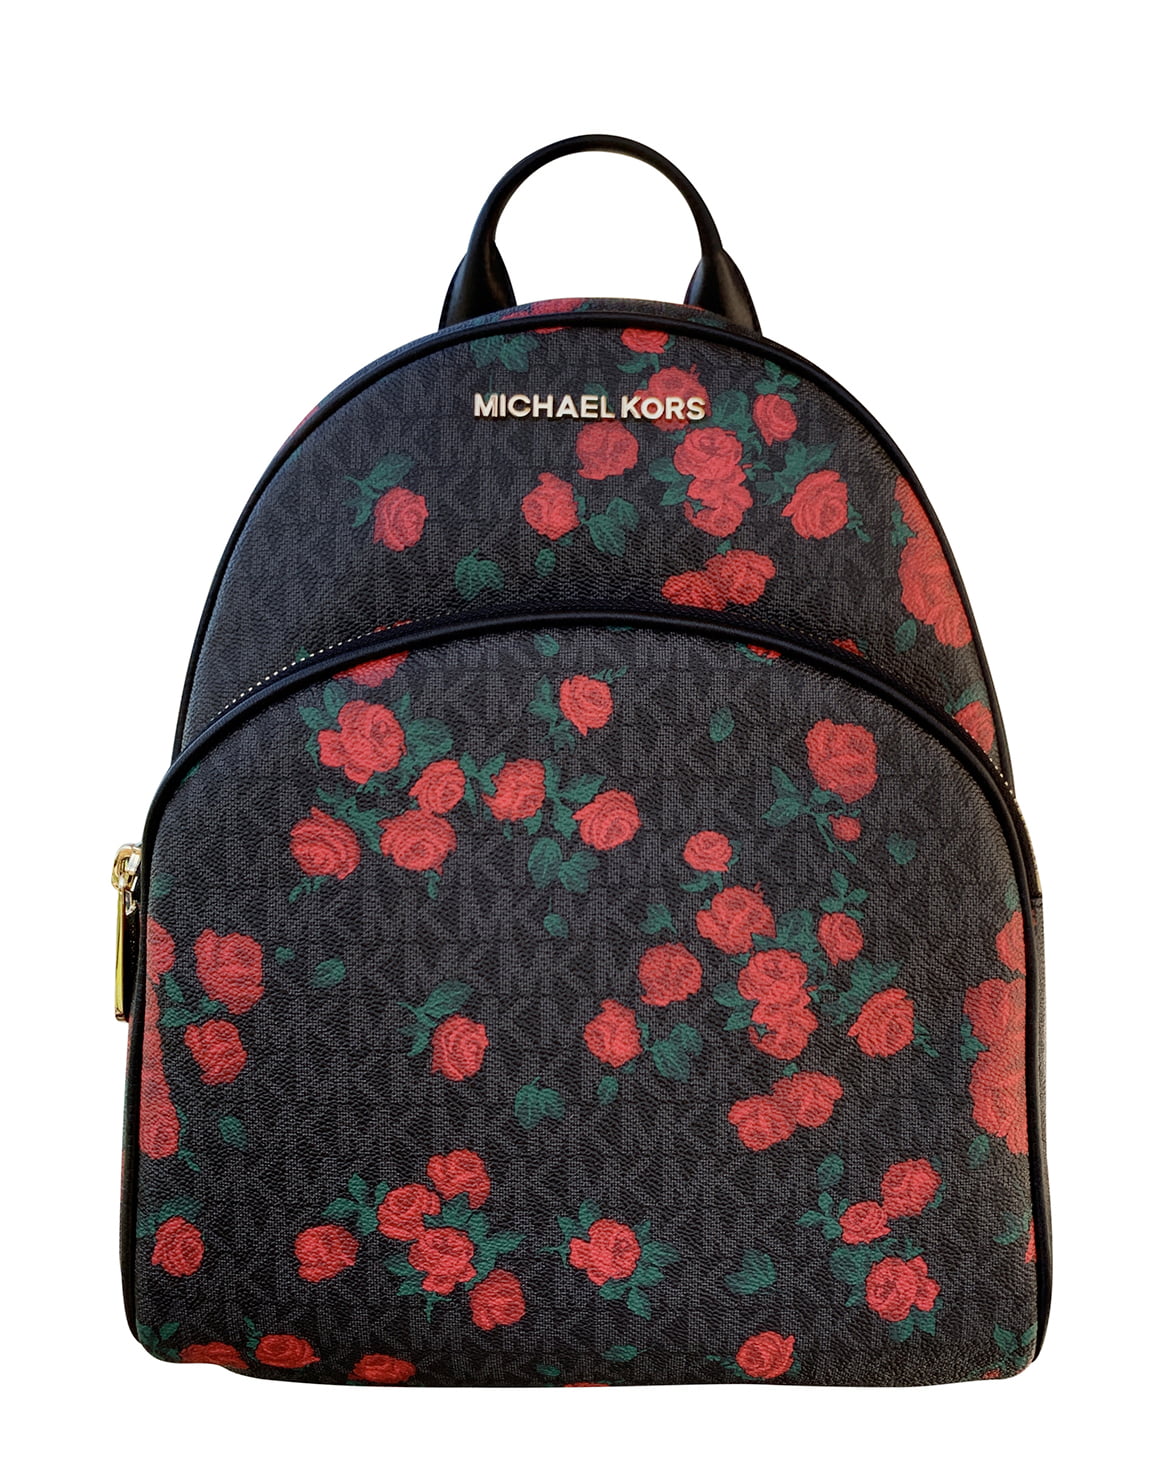 michael kors backpack rose